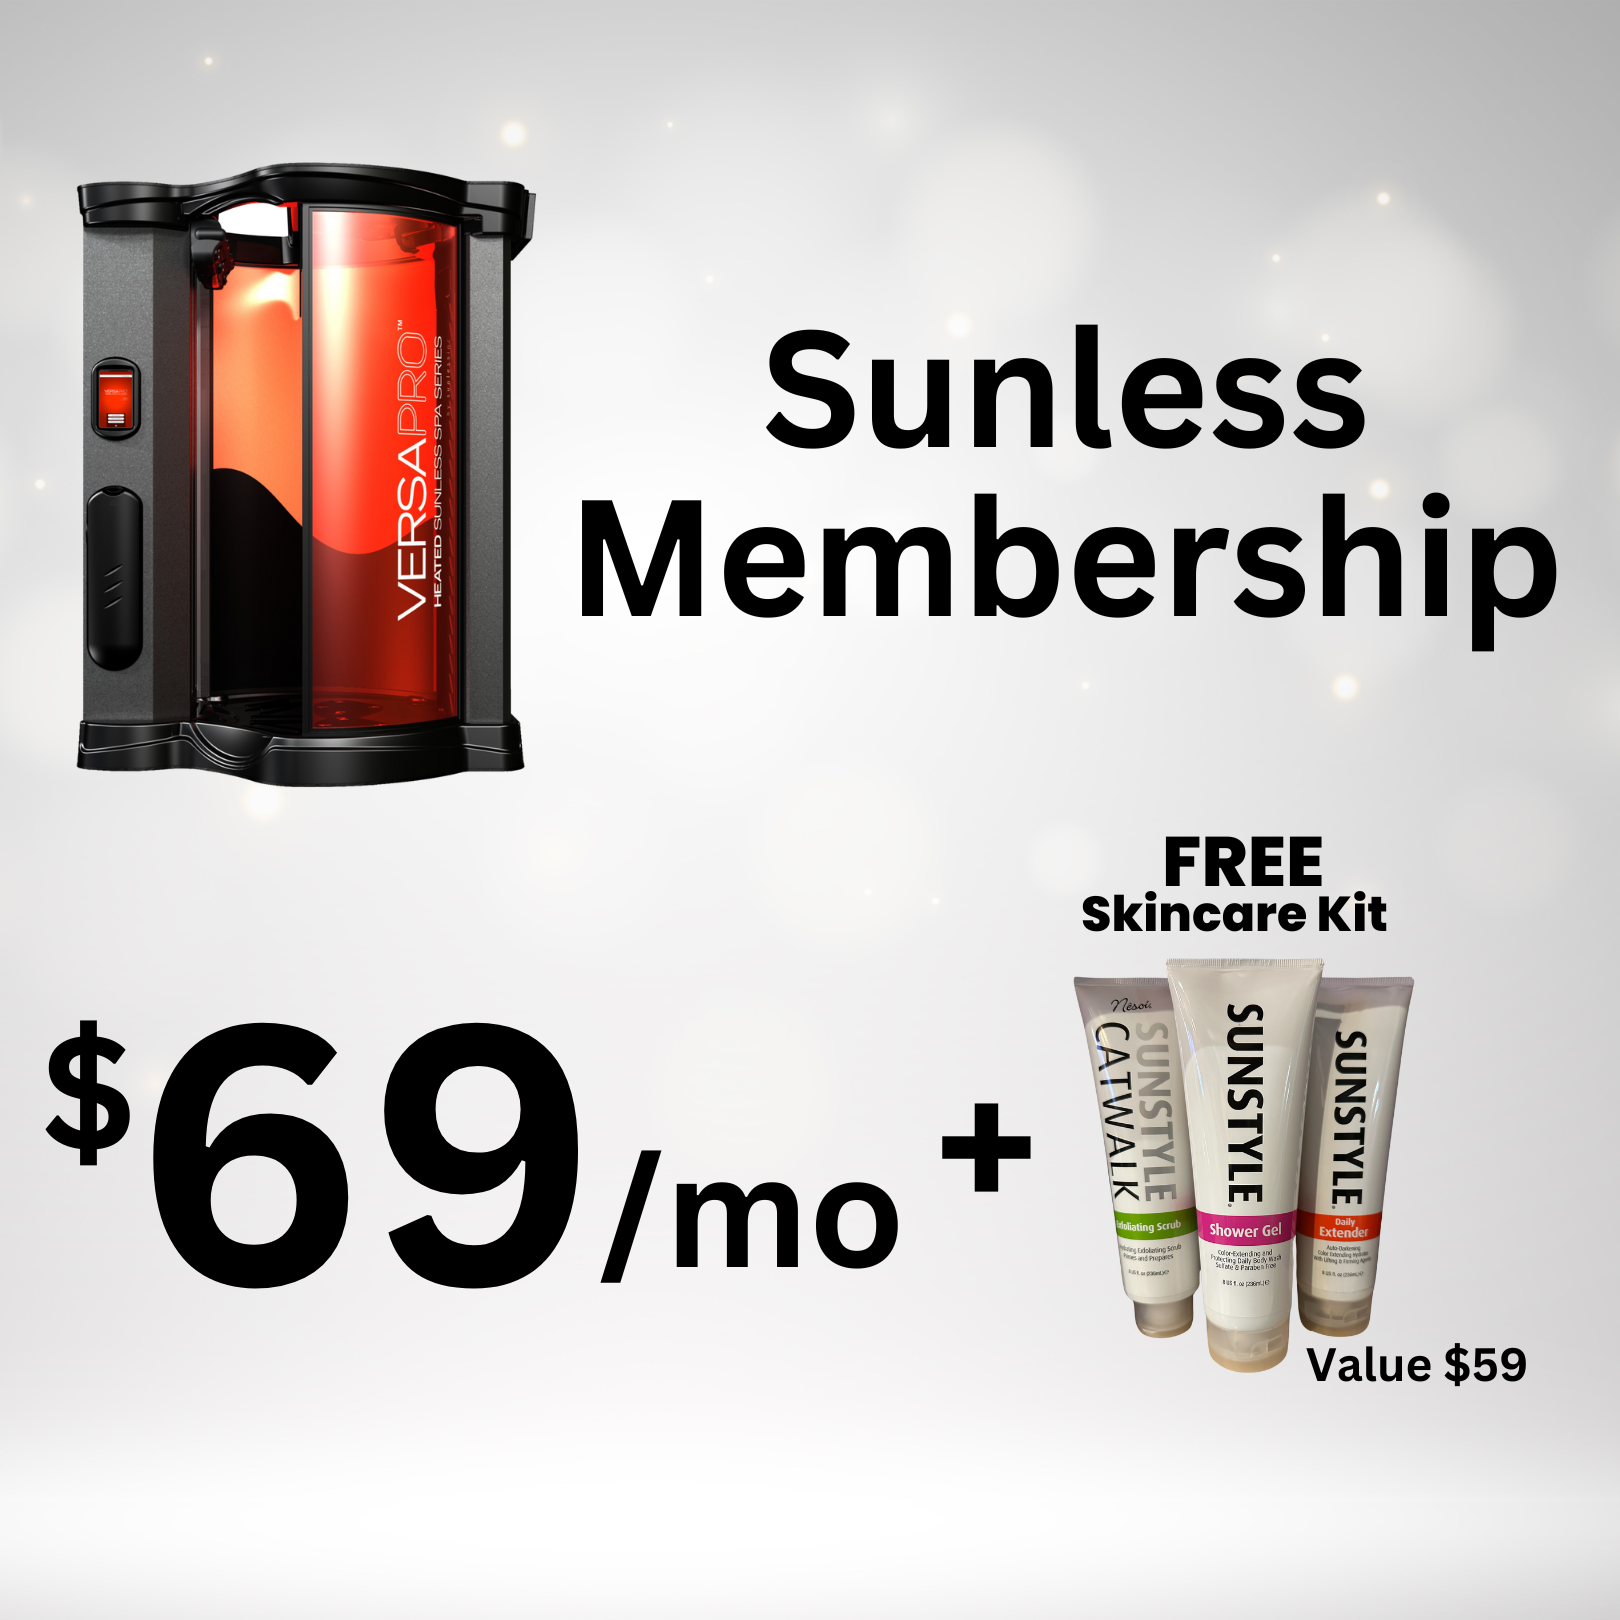 Free Skincare with Sunless Membership